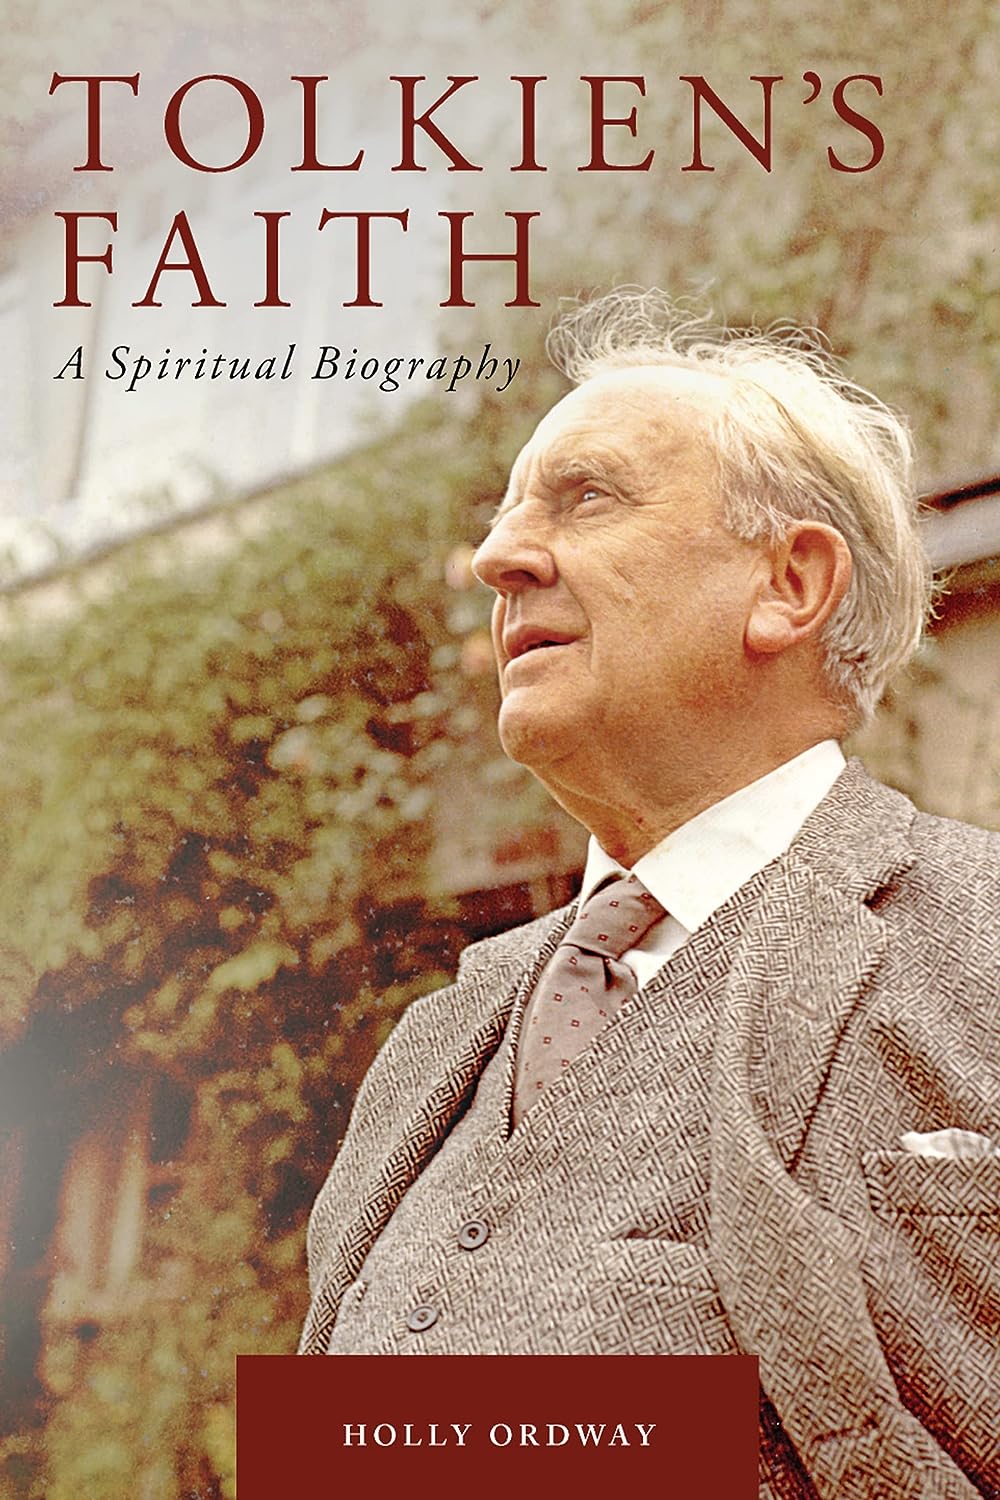 Tolkien's Faith: A Spiritual Biography